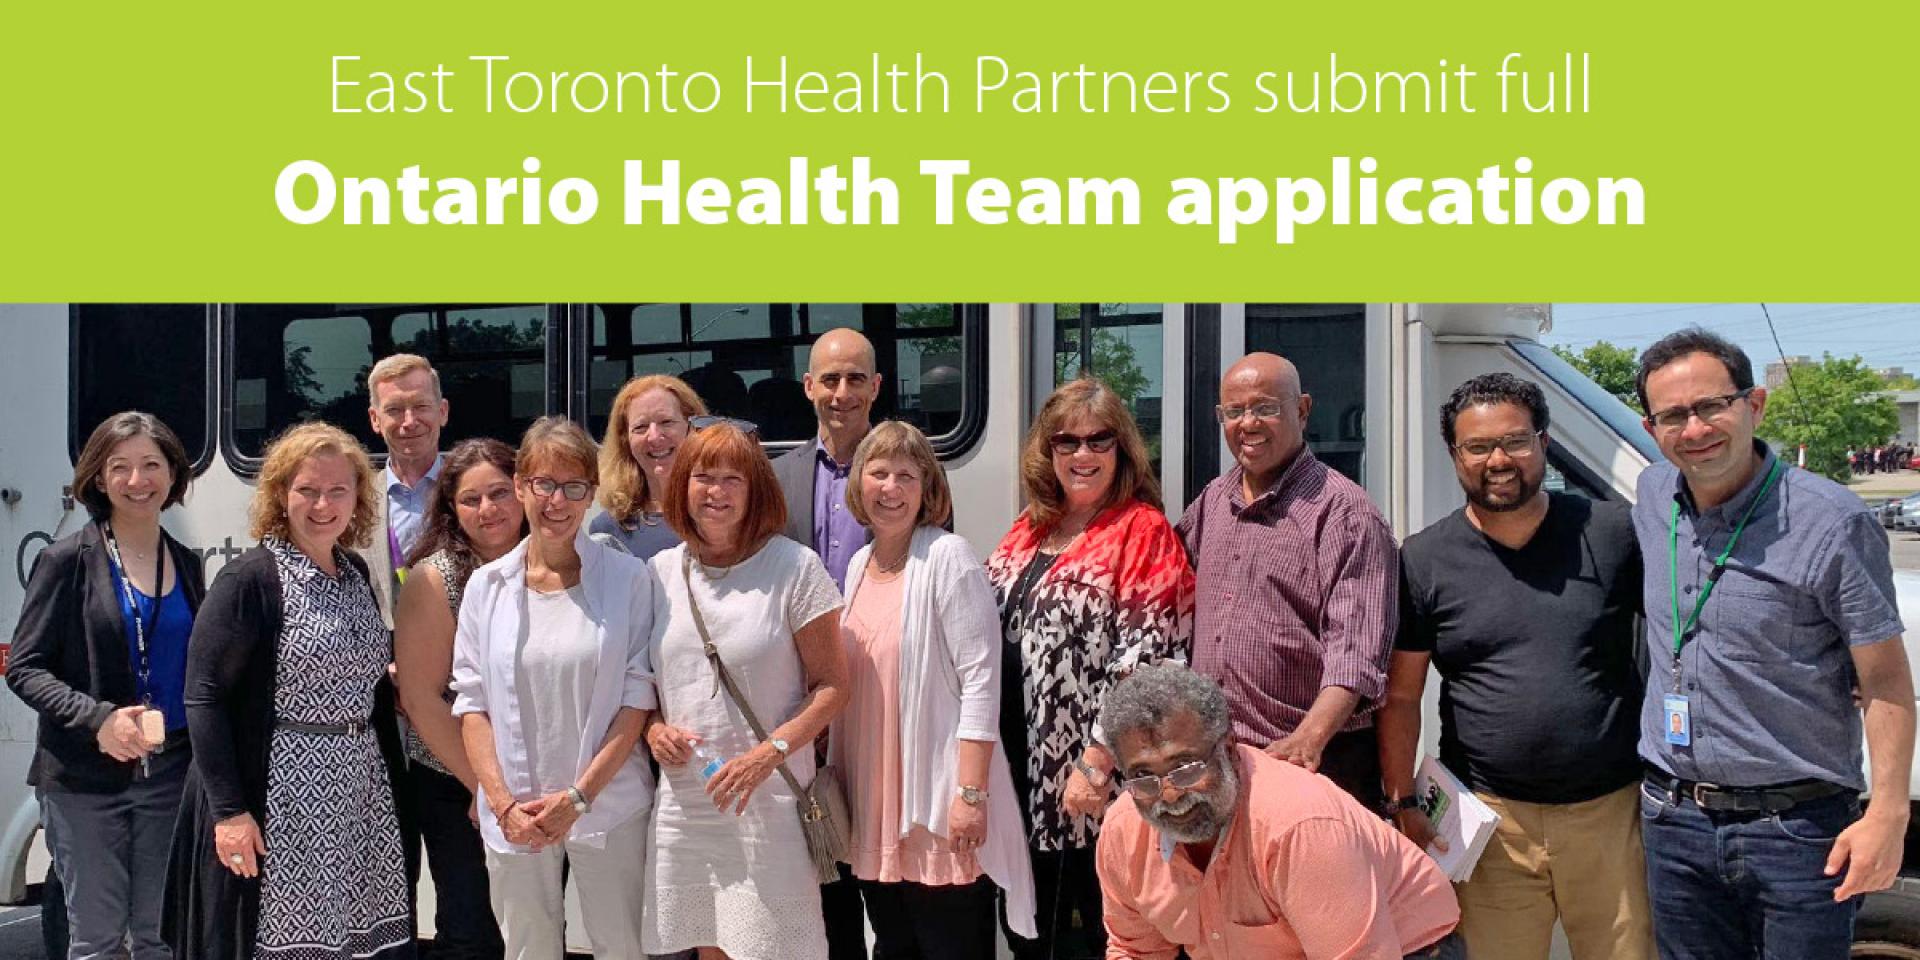 Team photo of East Toronto Health Partners.